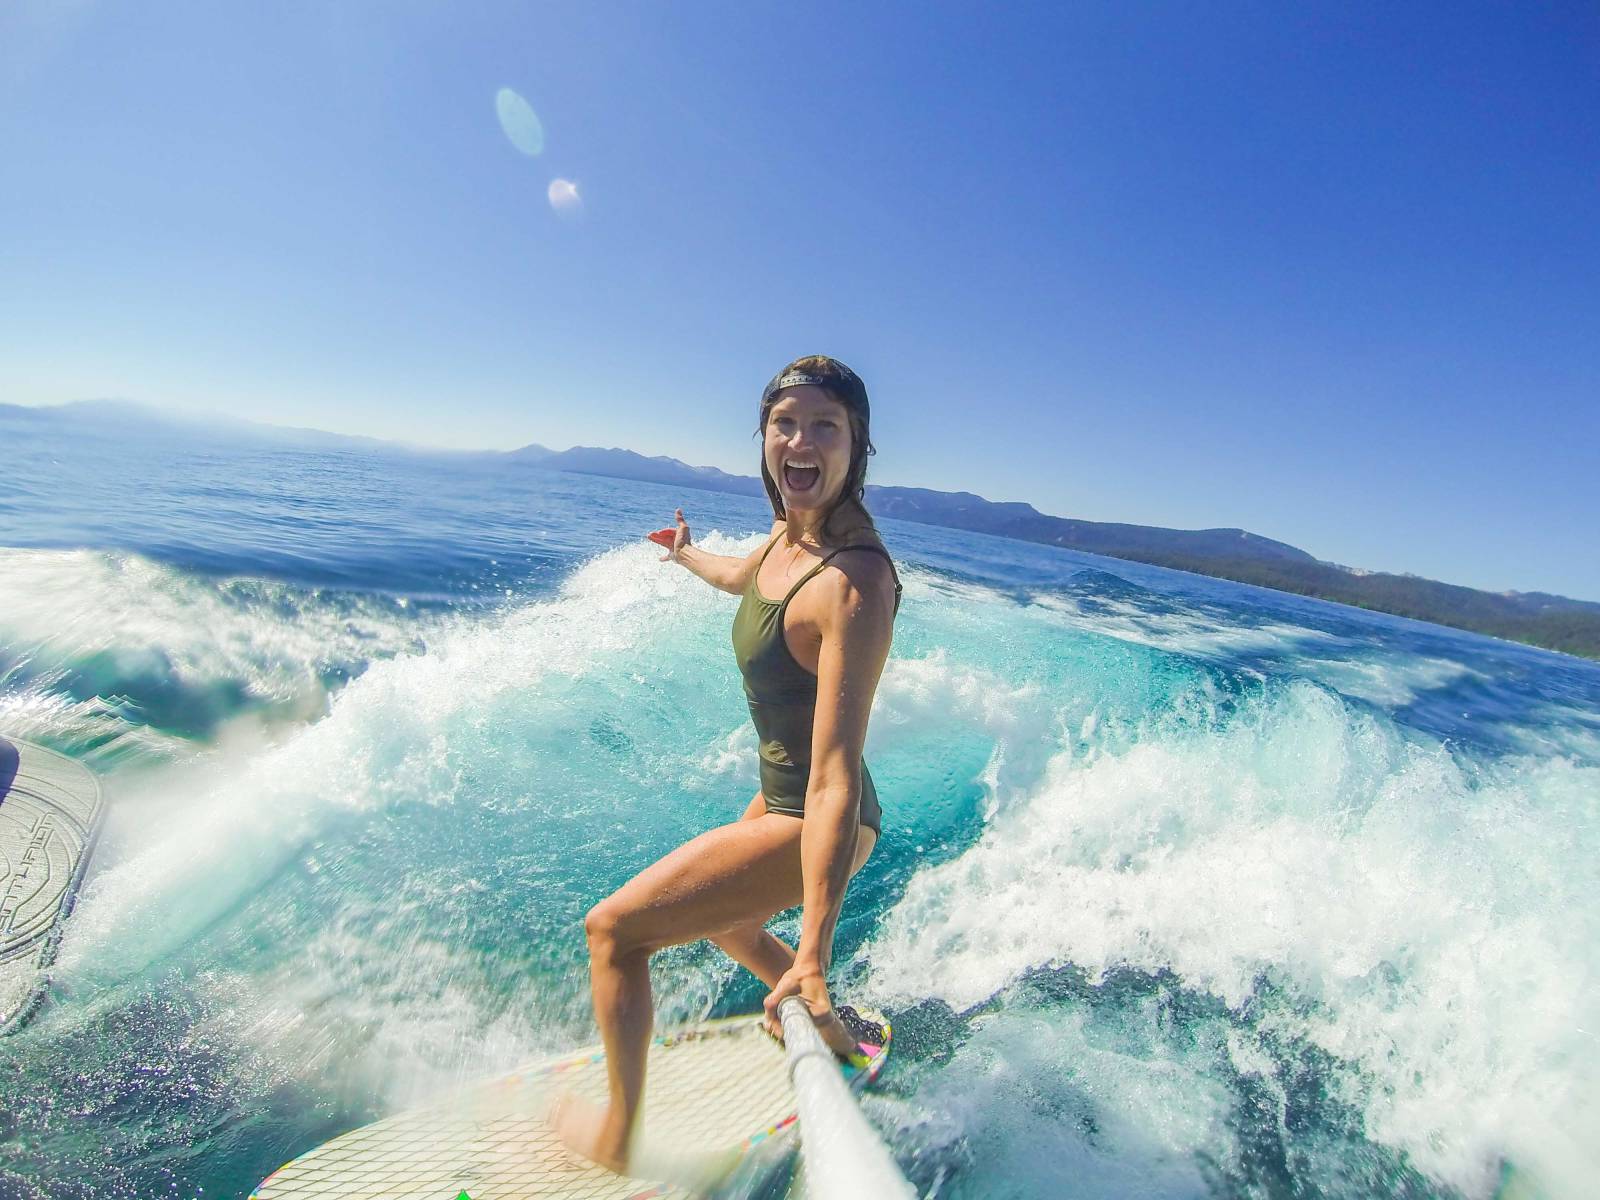 Julia Mancuso surfing with a selfie stick on Tavarua Island